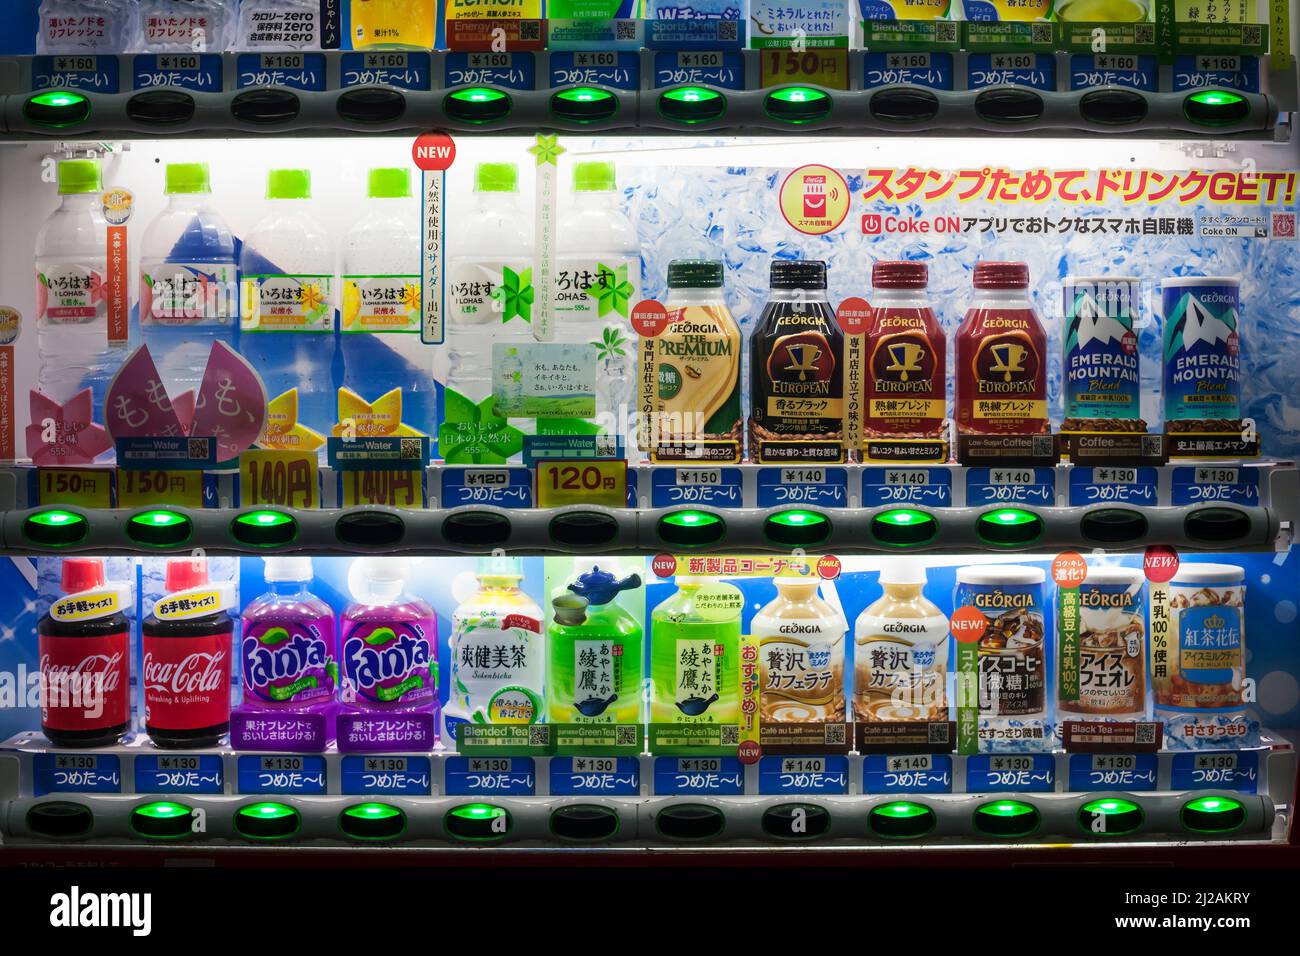 Horizontal close-up view of an illuminated and colorful Japanese soda vending machine at night Stock Photo